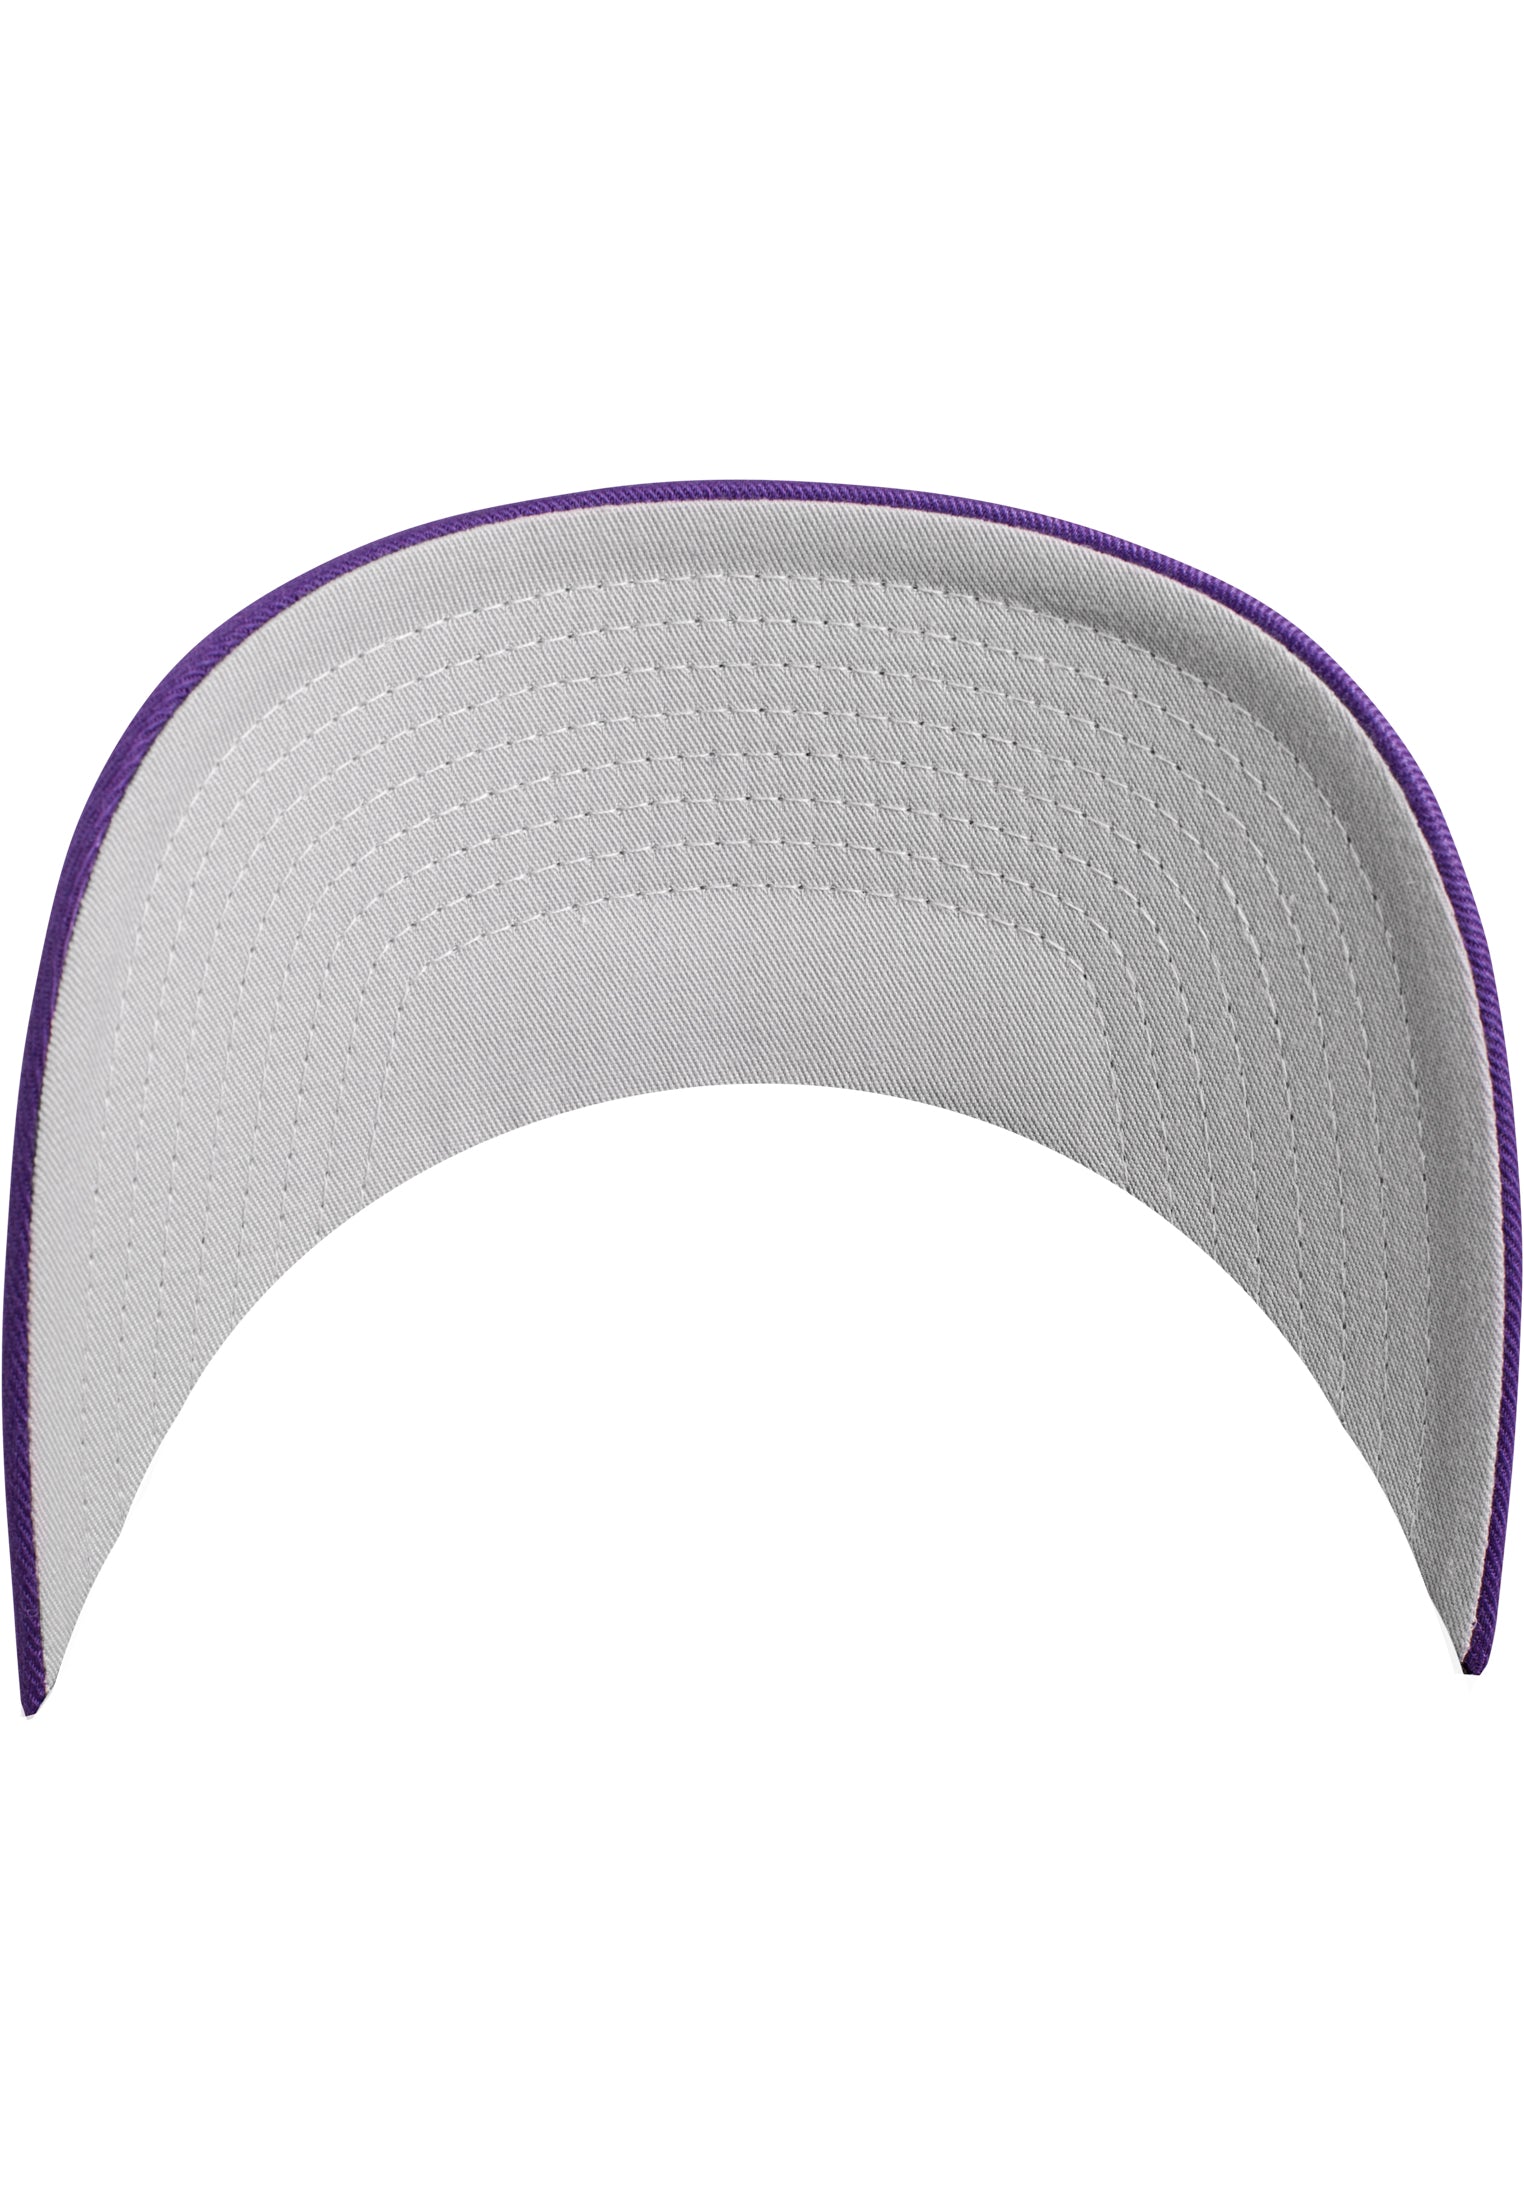 Flexfit Cap - Purple - Headz Up 